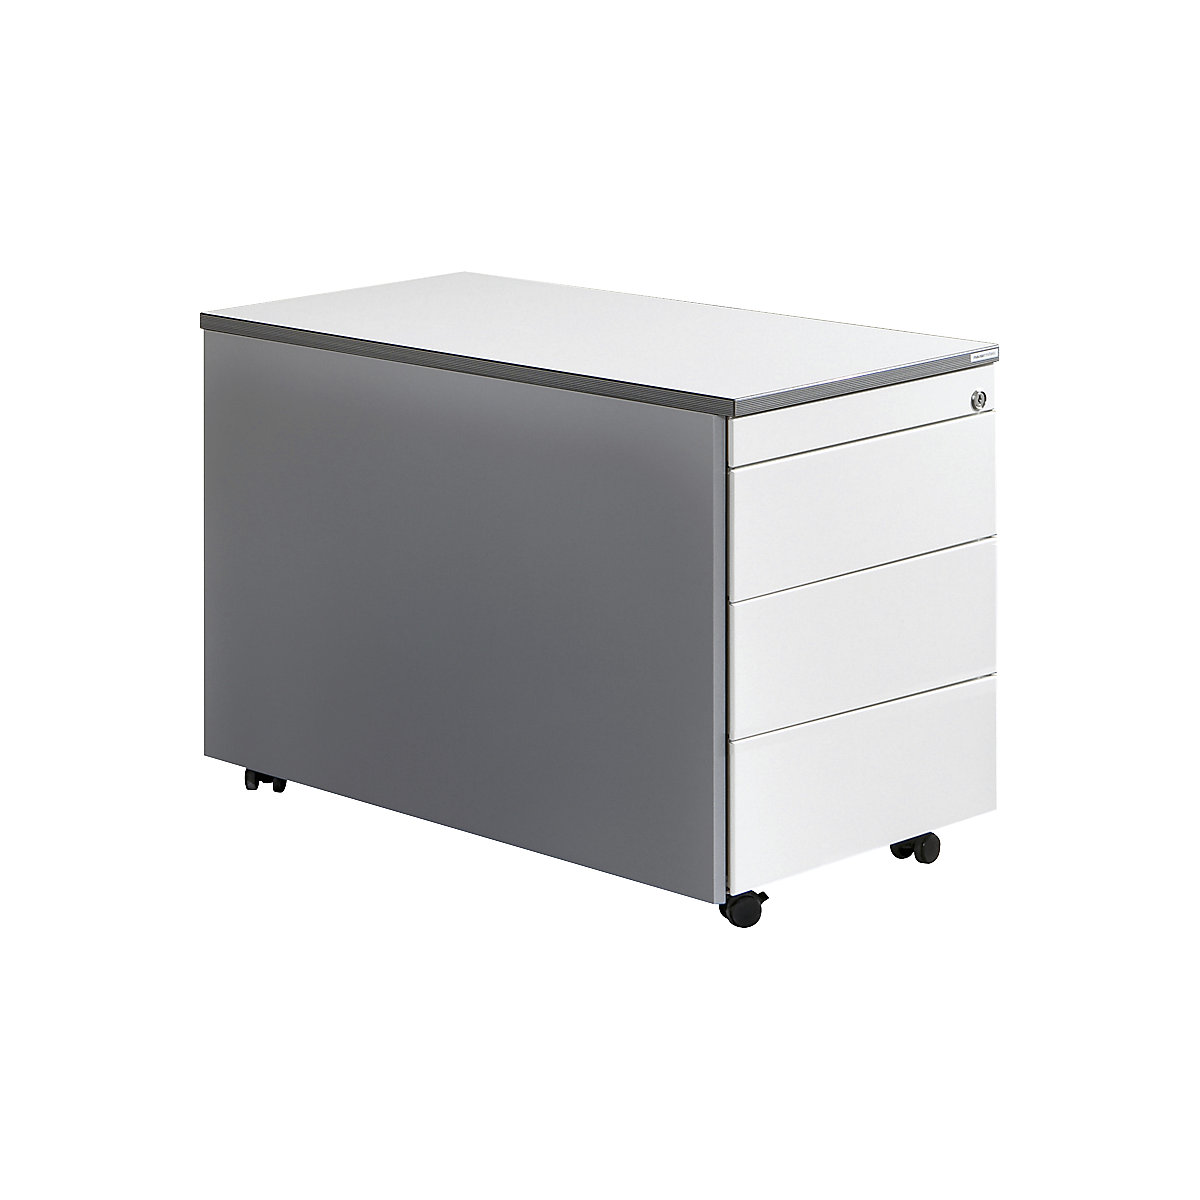 Mobile drawer unit – mauser